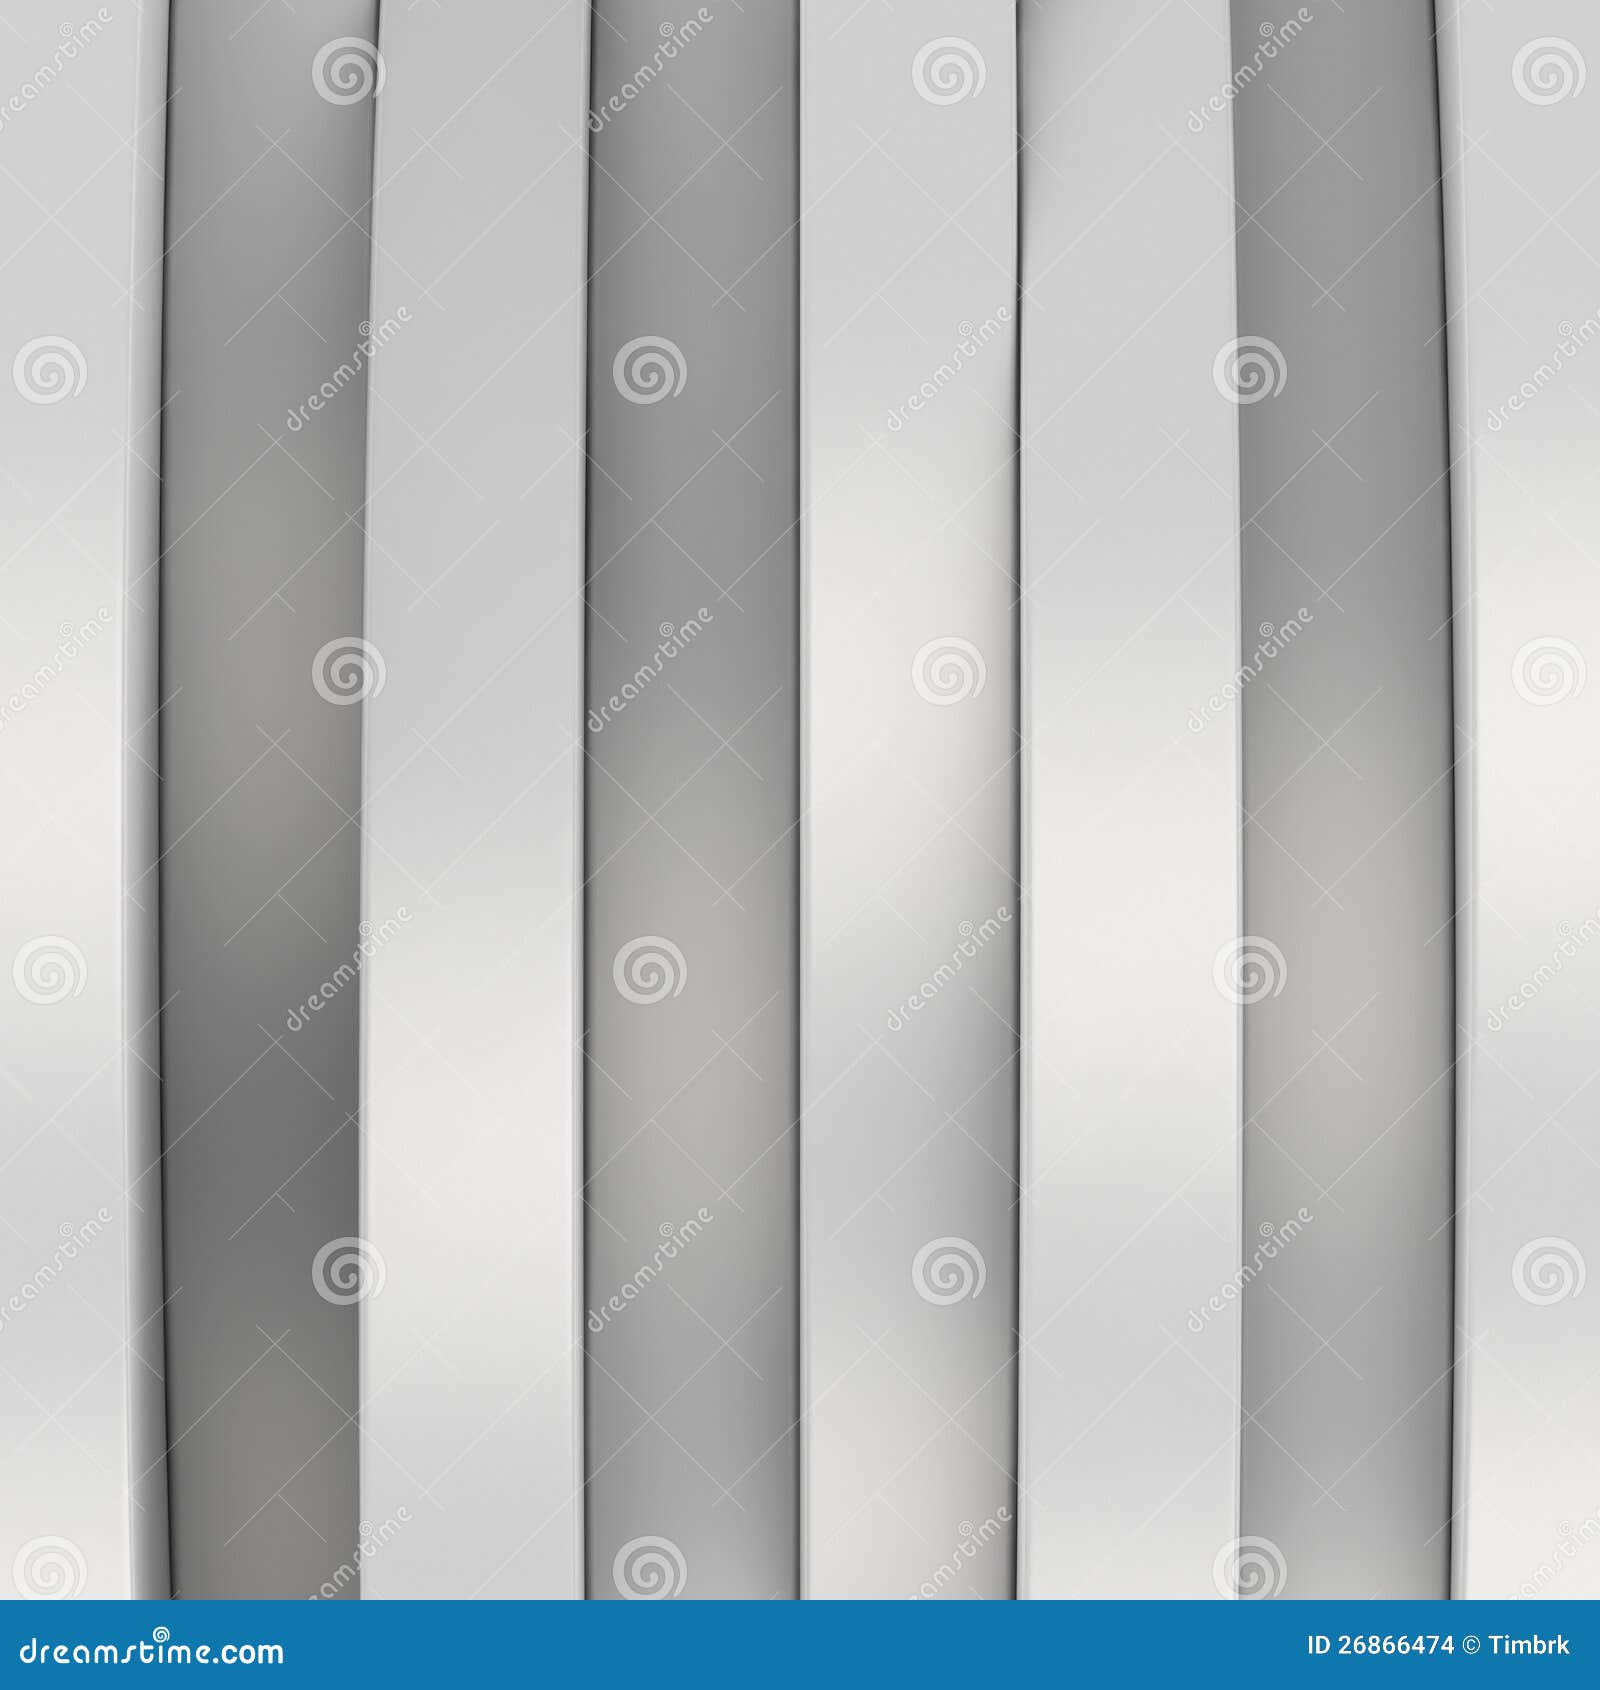 Vertical grey stripes stock illustration. Illustration of panel - 26866474